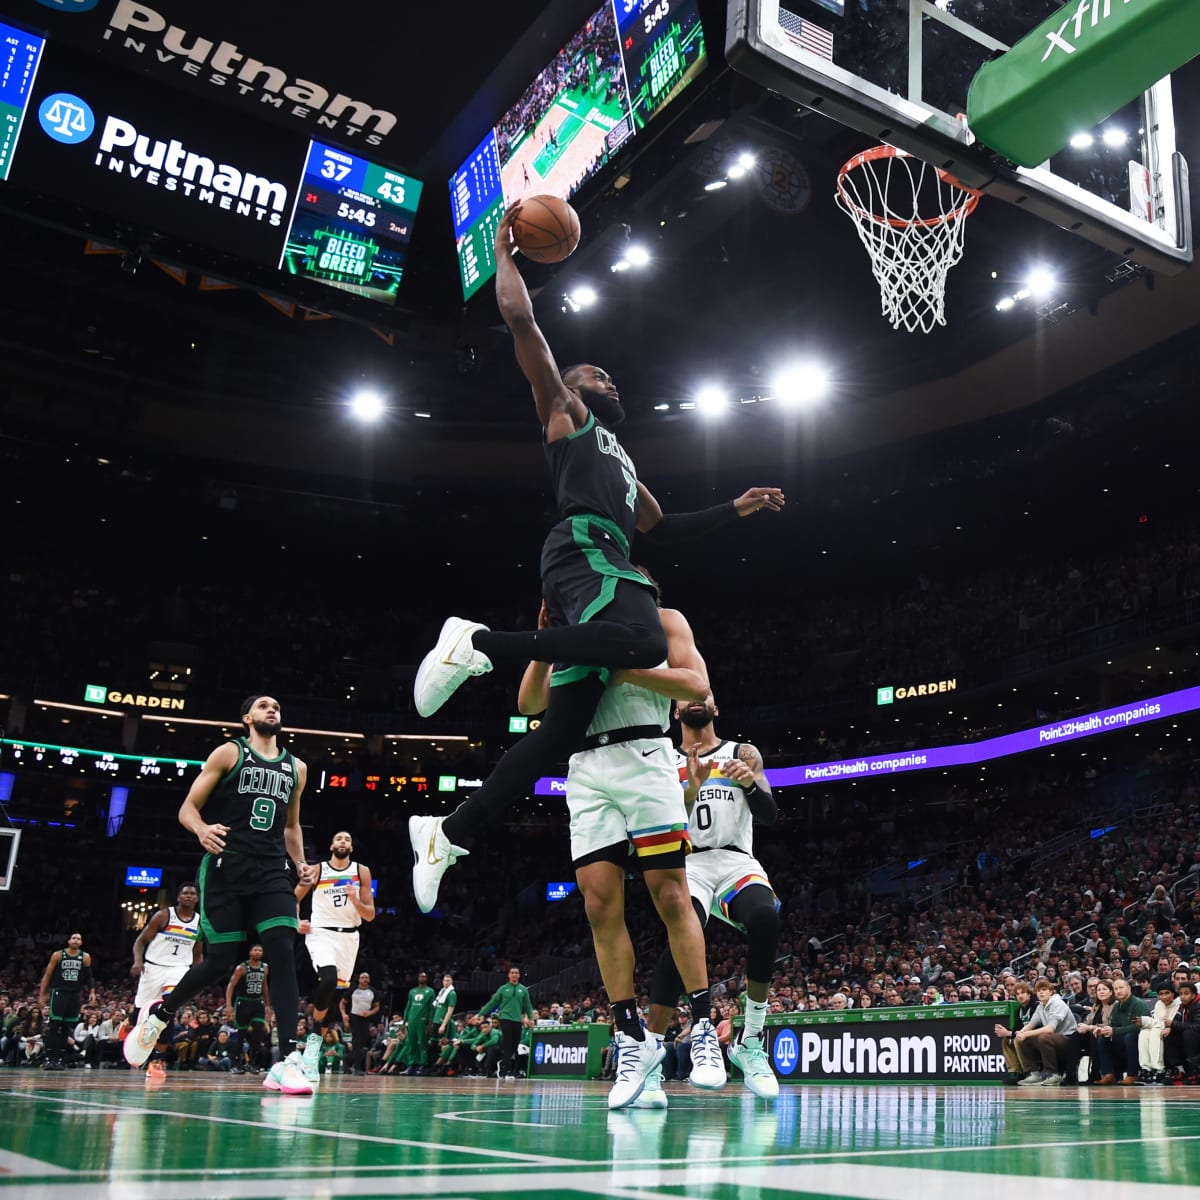 Fans to return to TD Garden for Celtics-Pelicans in late March - CelticsBlog